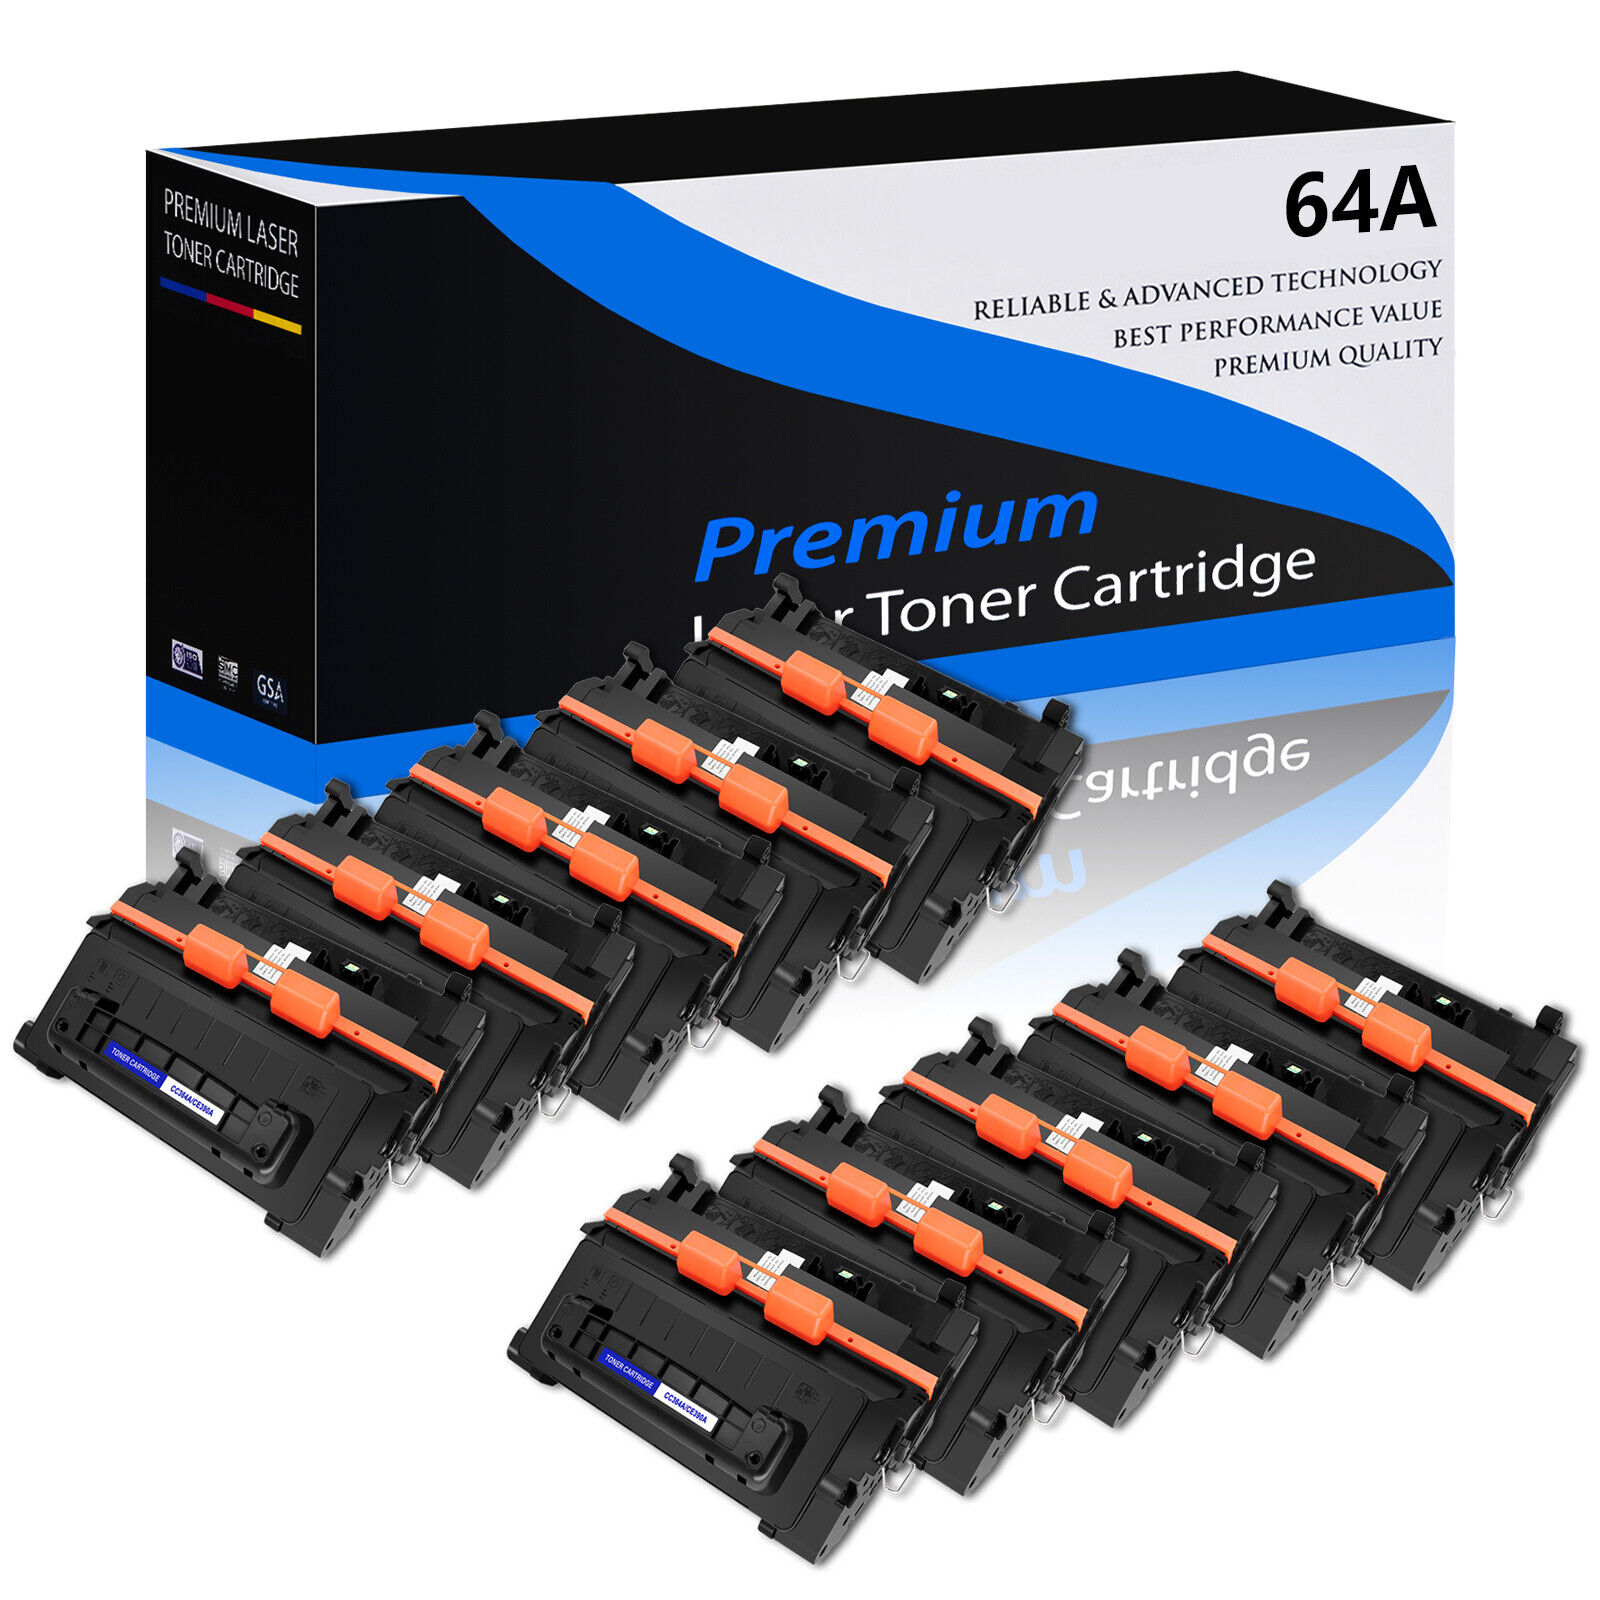 10 PACK Black CC364A 64A Toner Cartridge For HP LaserJet P4515n P4515tn P4515x